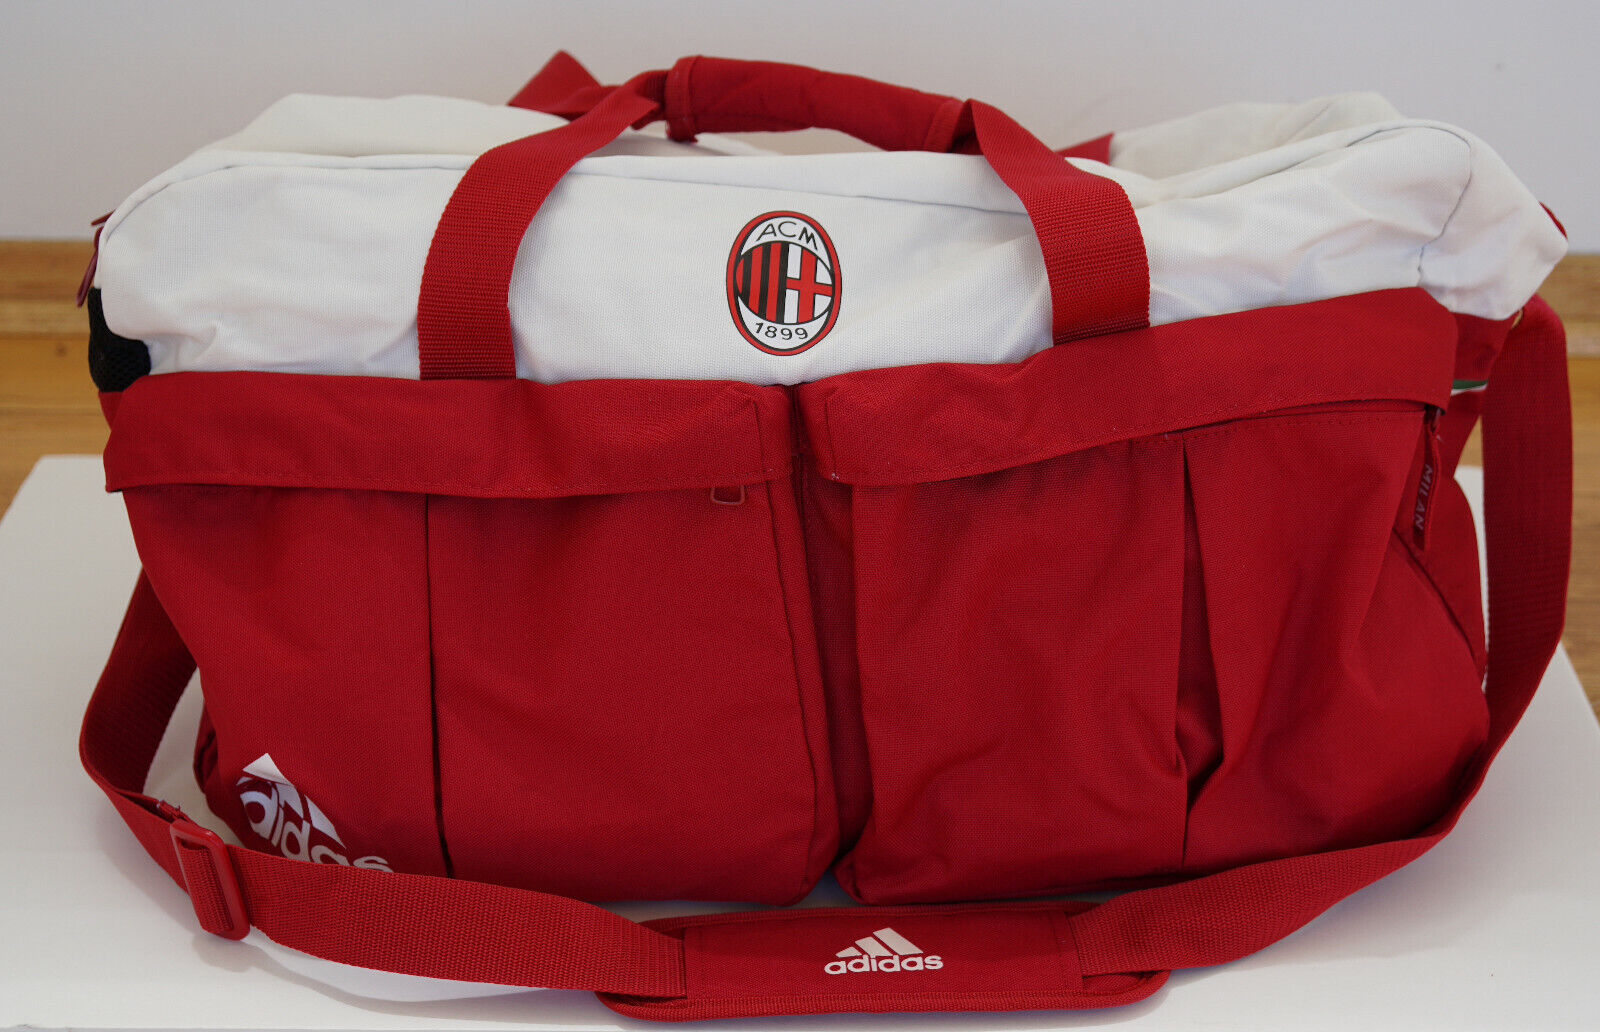 Adidas Ac Milan - Duffel Bag Anthem Away, Pockets And Shoulder Strap - White/red